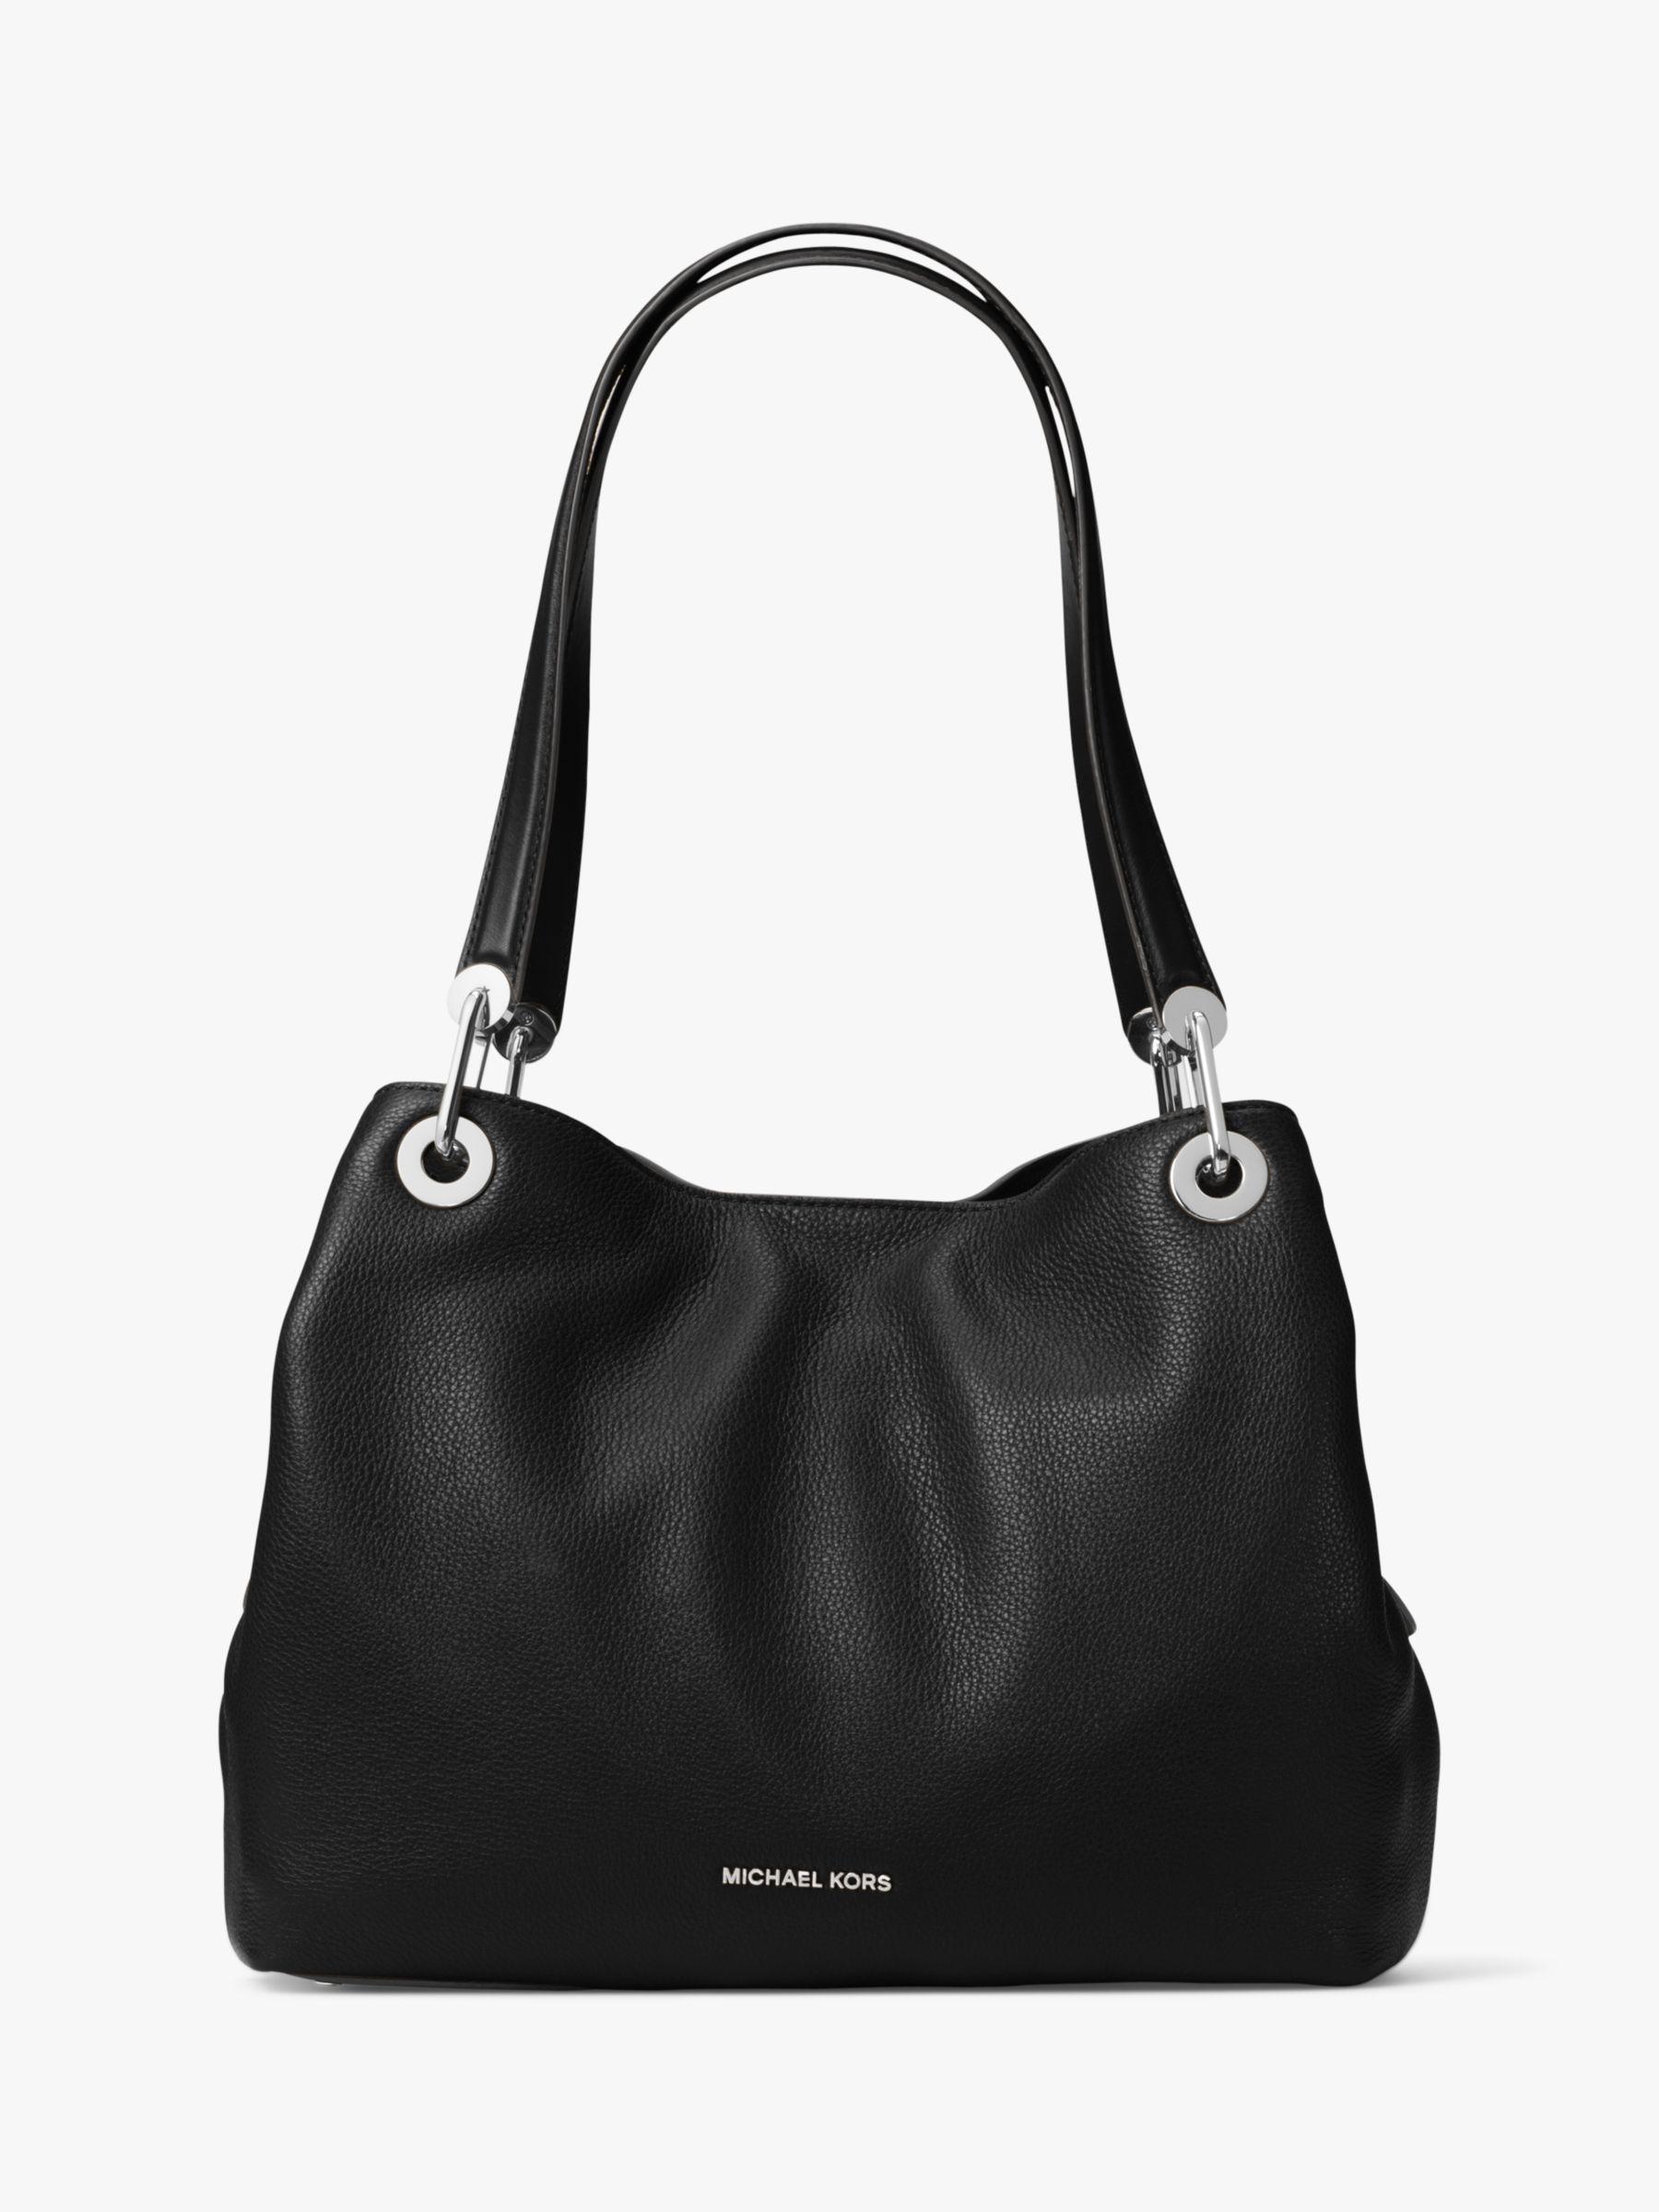 michael kors women's bag mk handbag